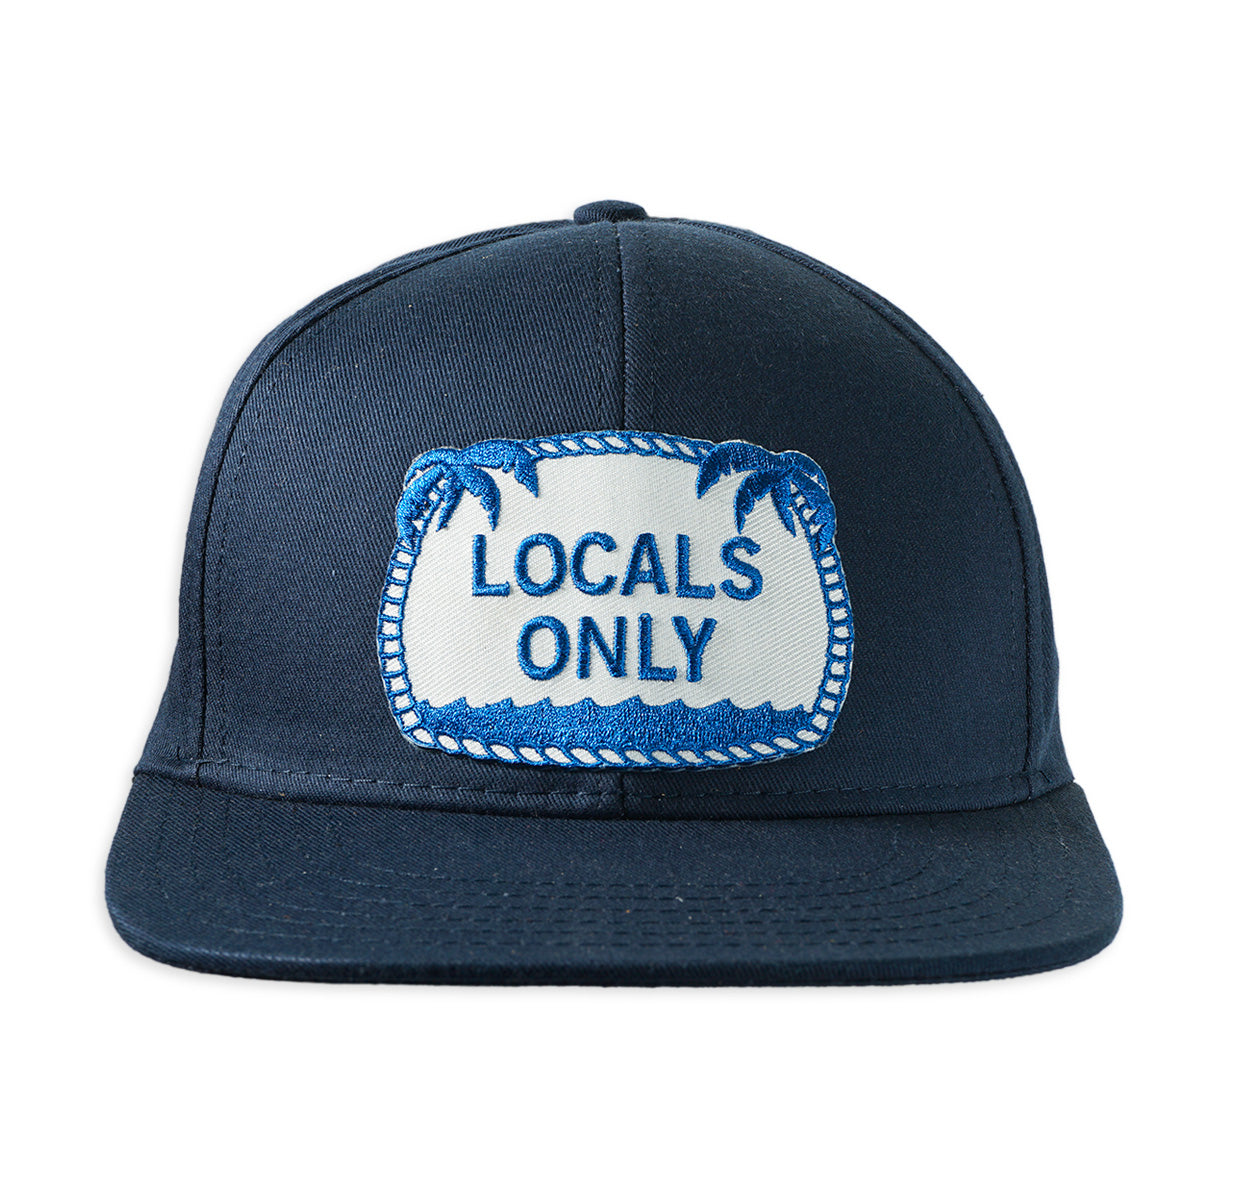 Locals Only ball cap